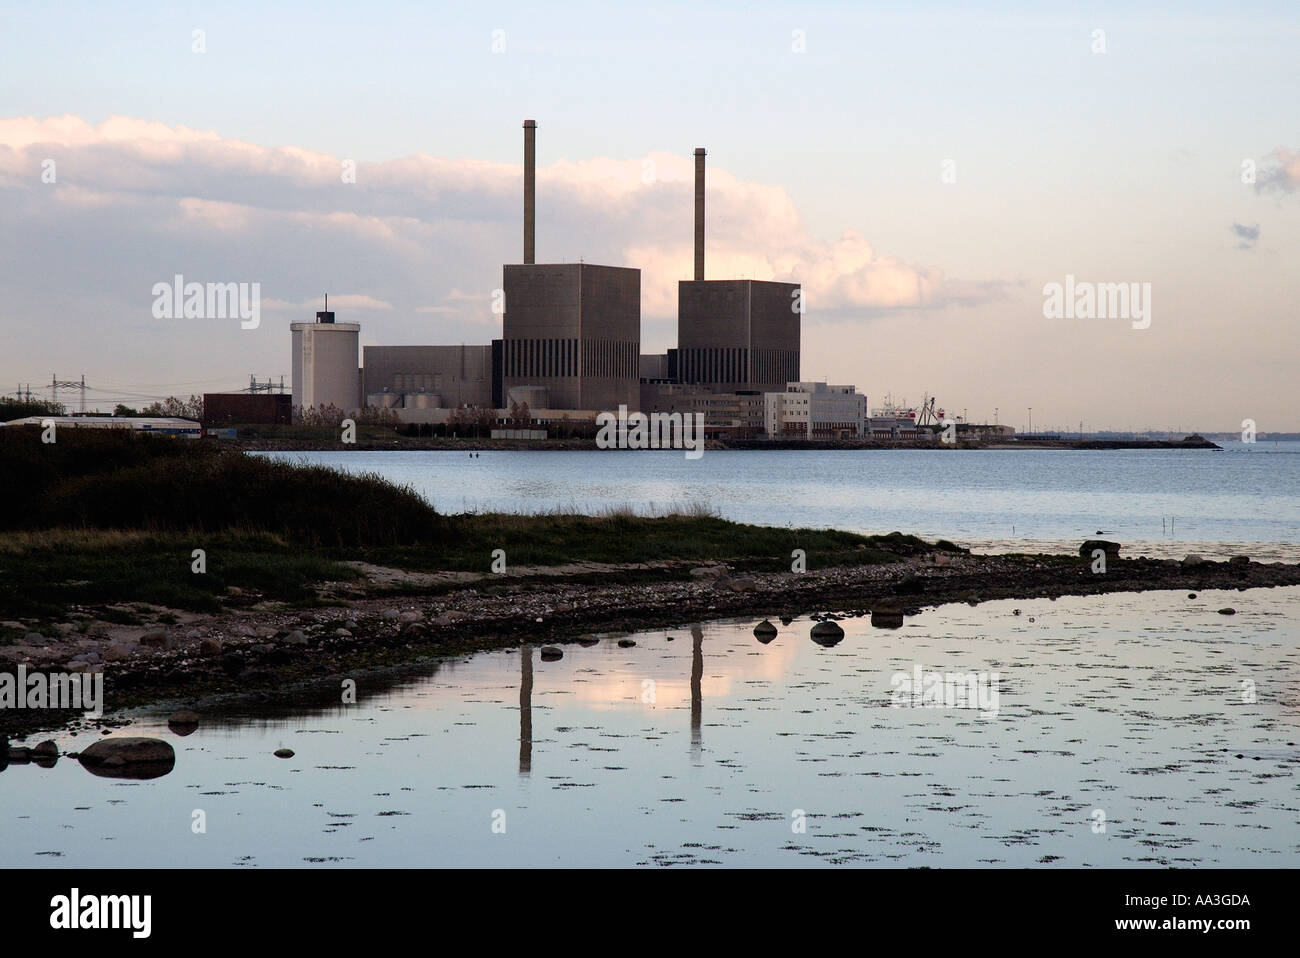 Barsebäck nuclear power Sweden Stock Photo - Alamy